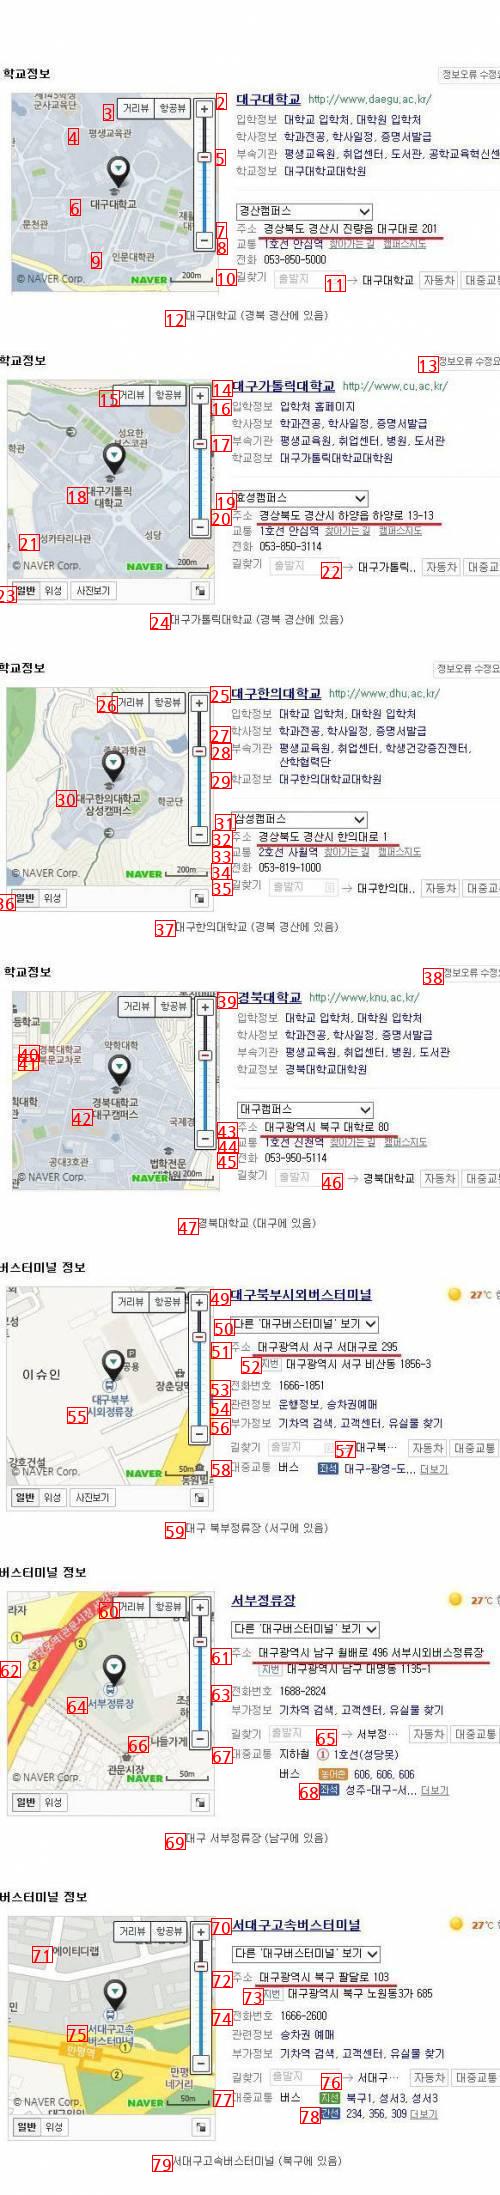 Daegu's unique place name.jpg